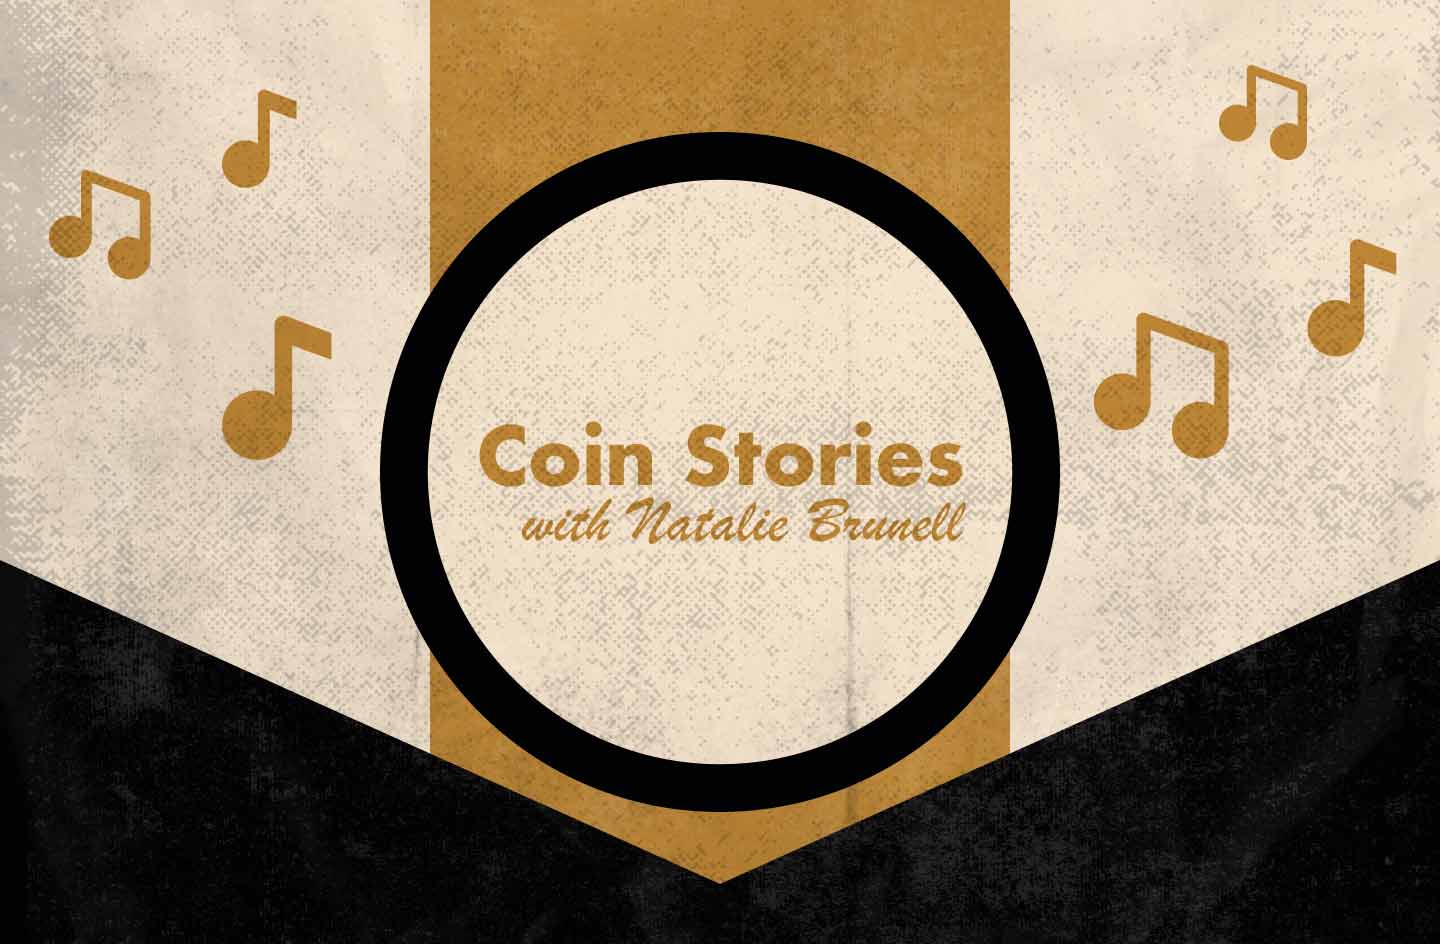 Coin Stories with Natalie Brunell (Historias de monedas con Natalie Brunell)